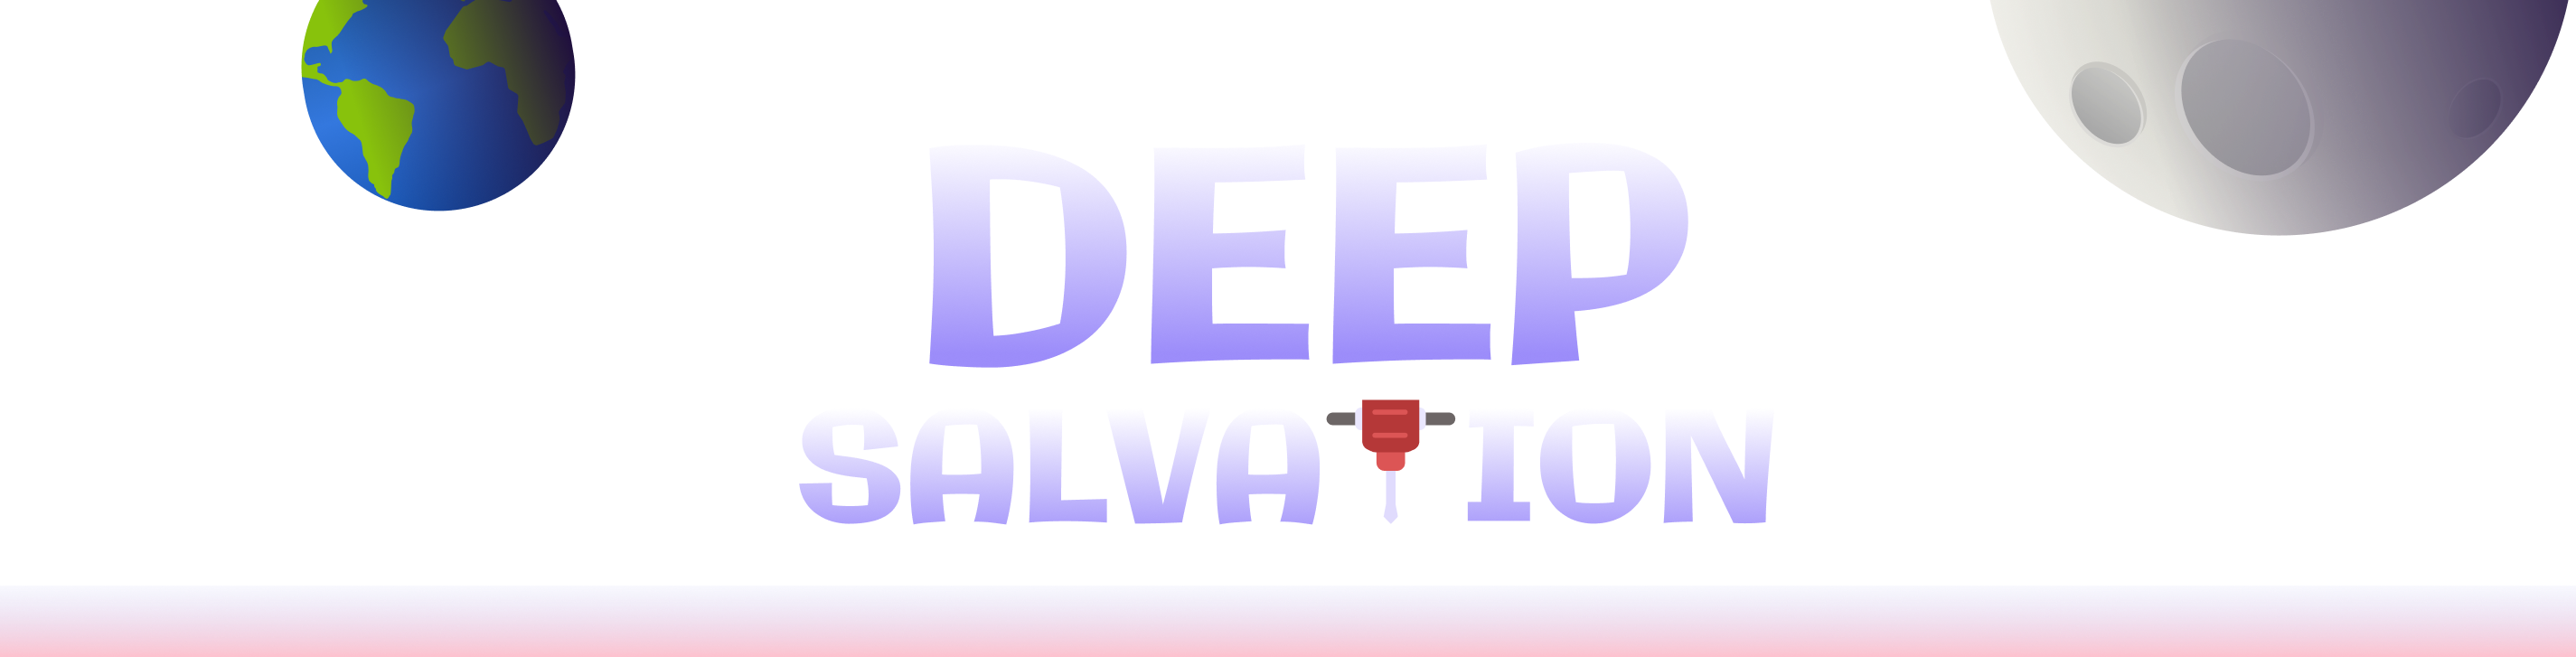 Deep Salvation